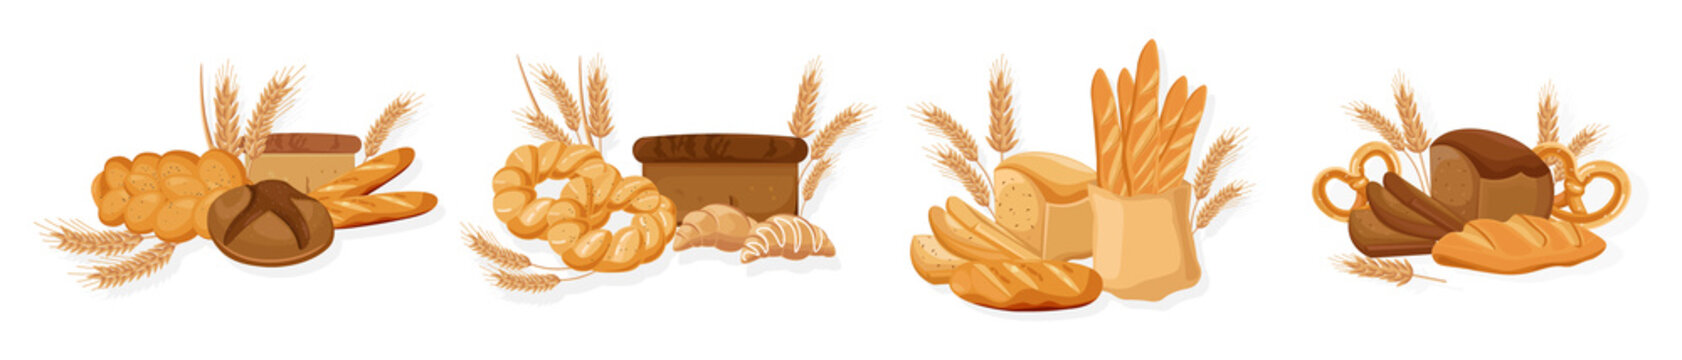 Bakery set Vector. Bread, pretzel, croissant. Front view detailed illustrations